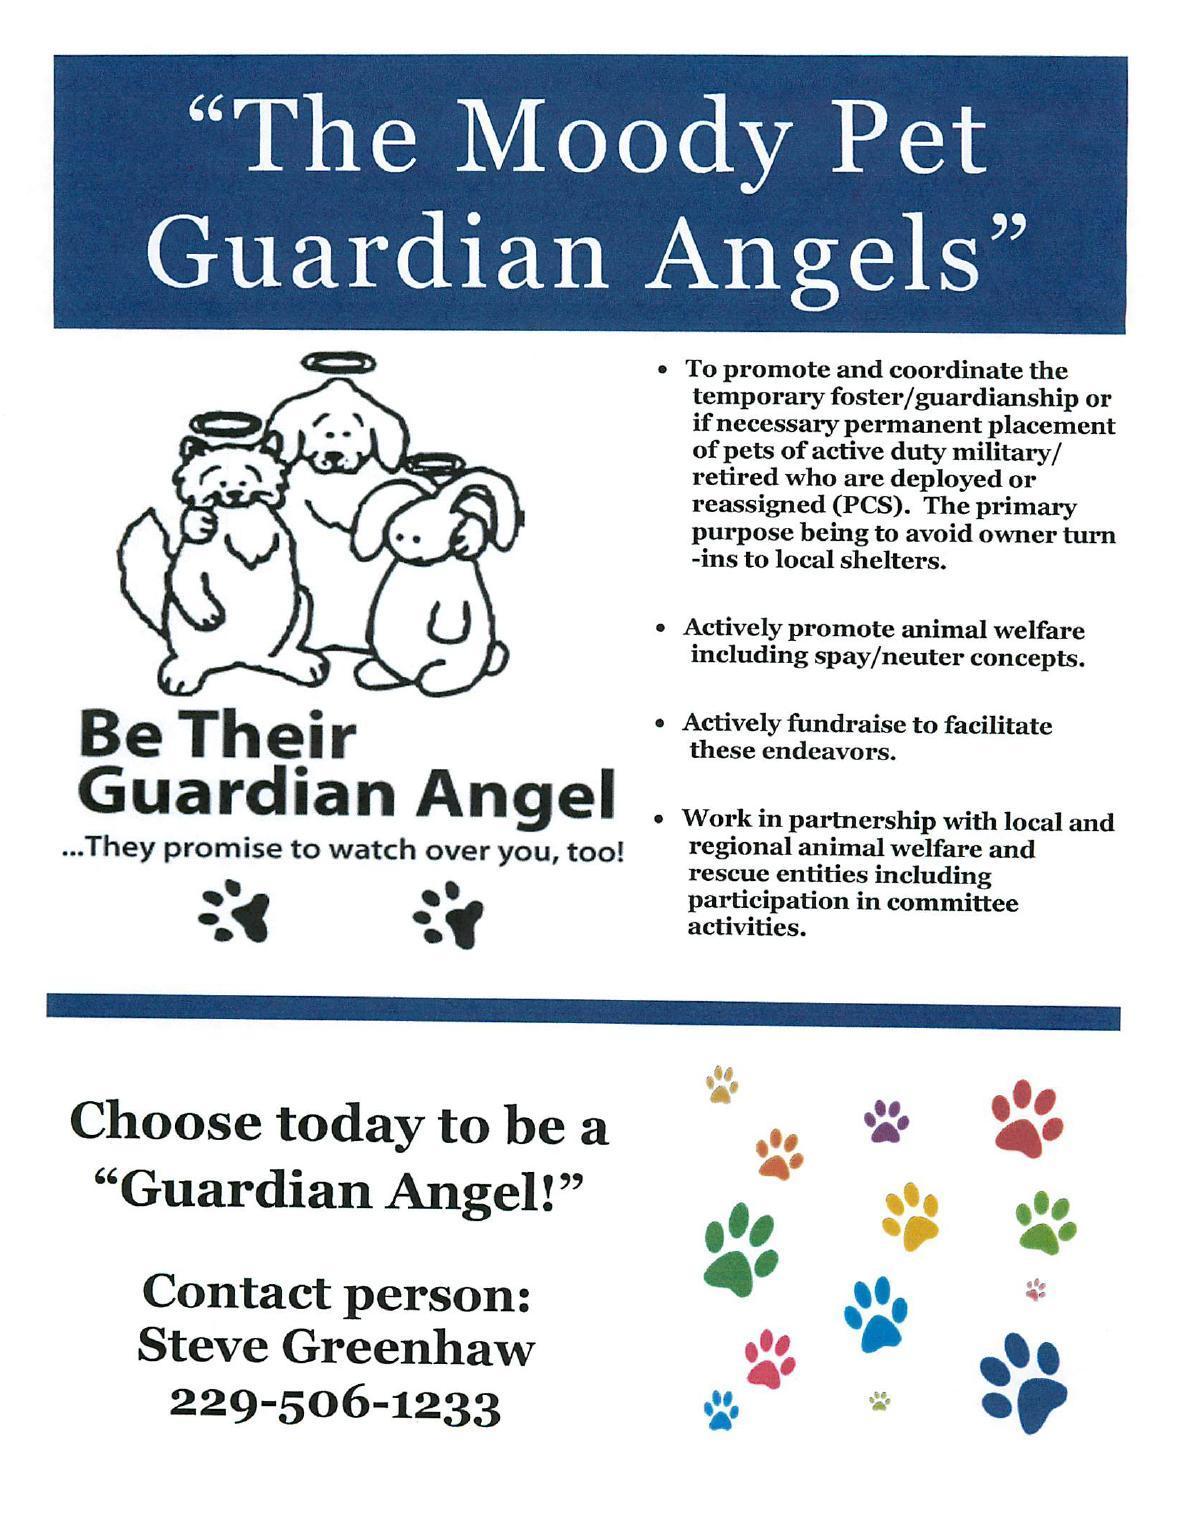 Moody Pet Guardian Angels Program